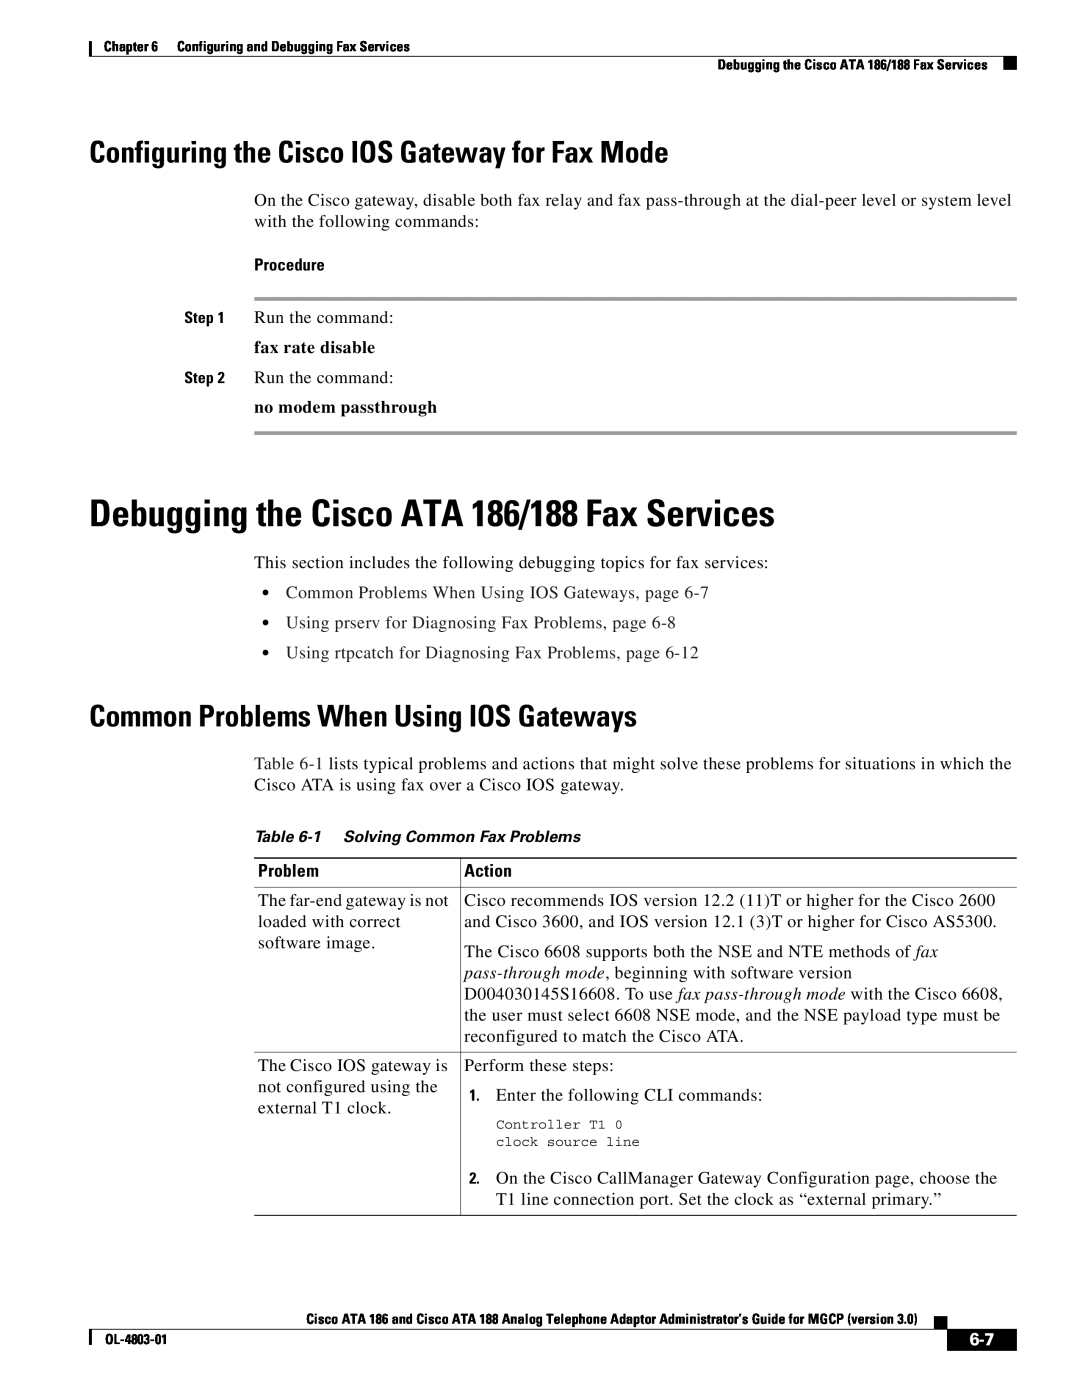 Cisco Systems Debugging the Cisco ATA 186/188 Fax Services, Configuring the Cisco IOS Gateway for Fax Mode, Problem 